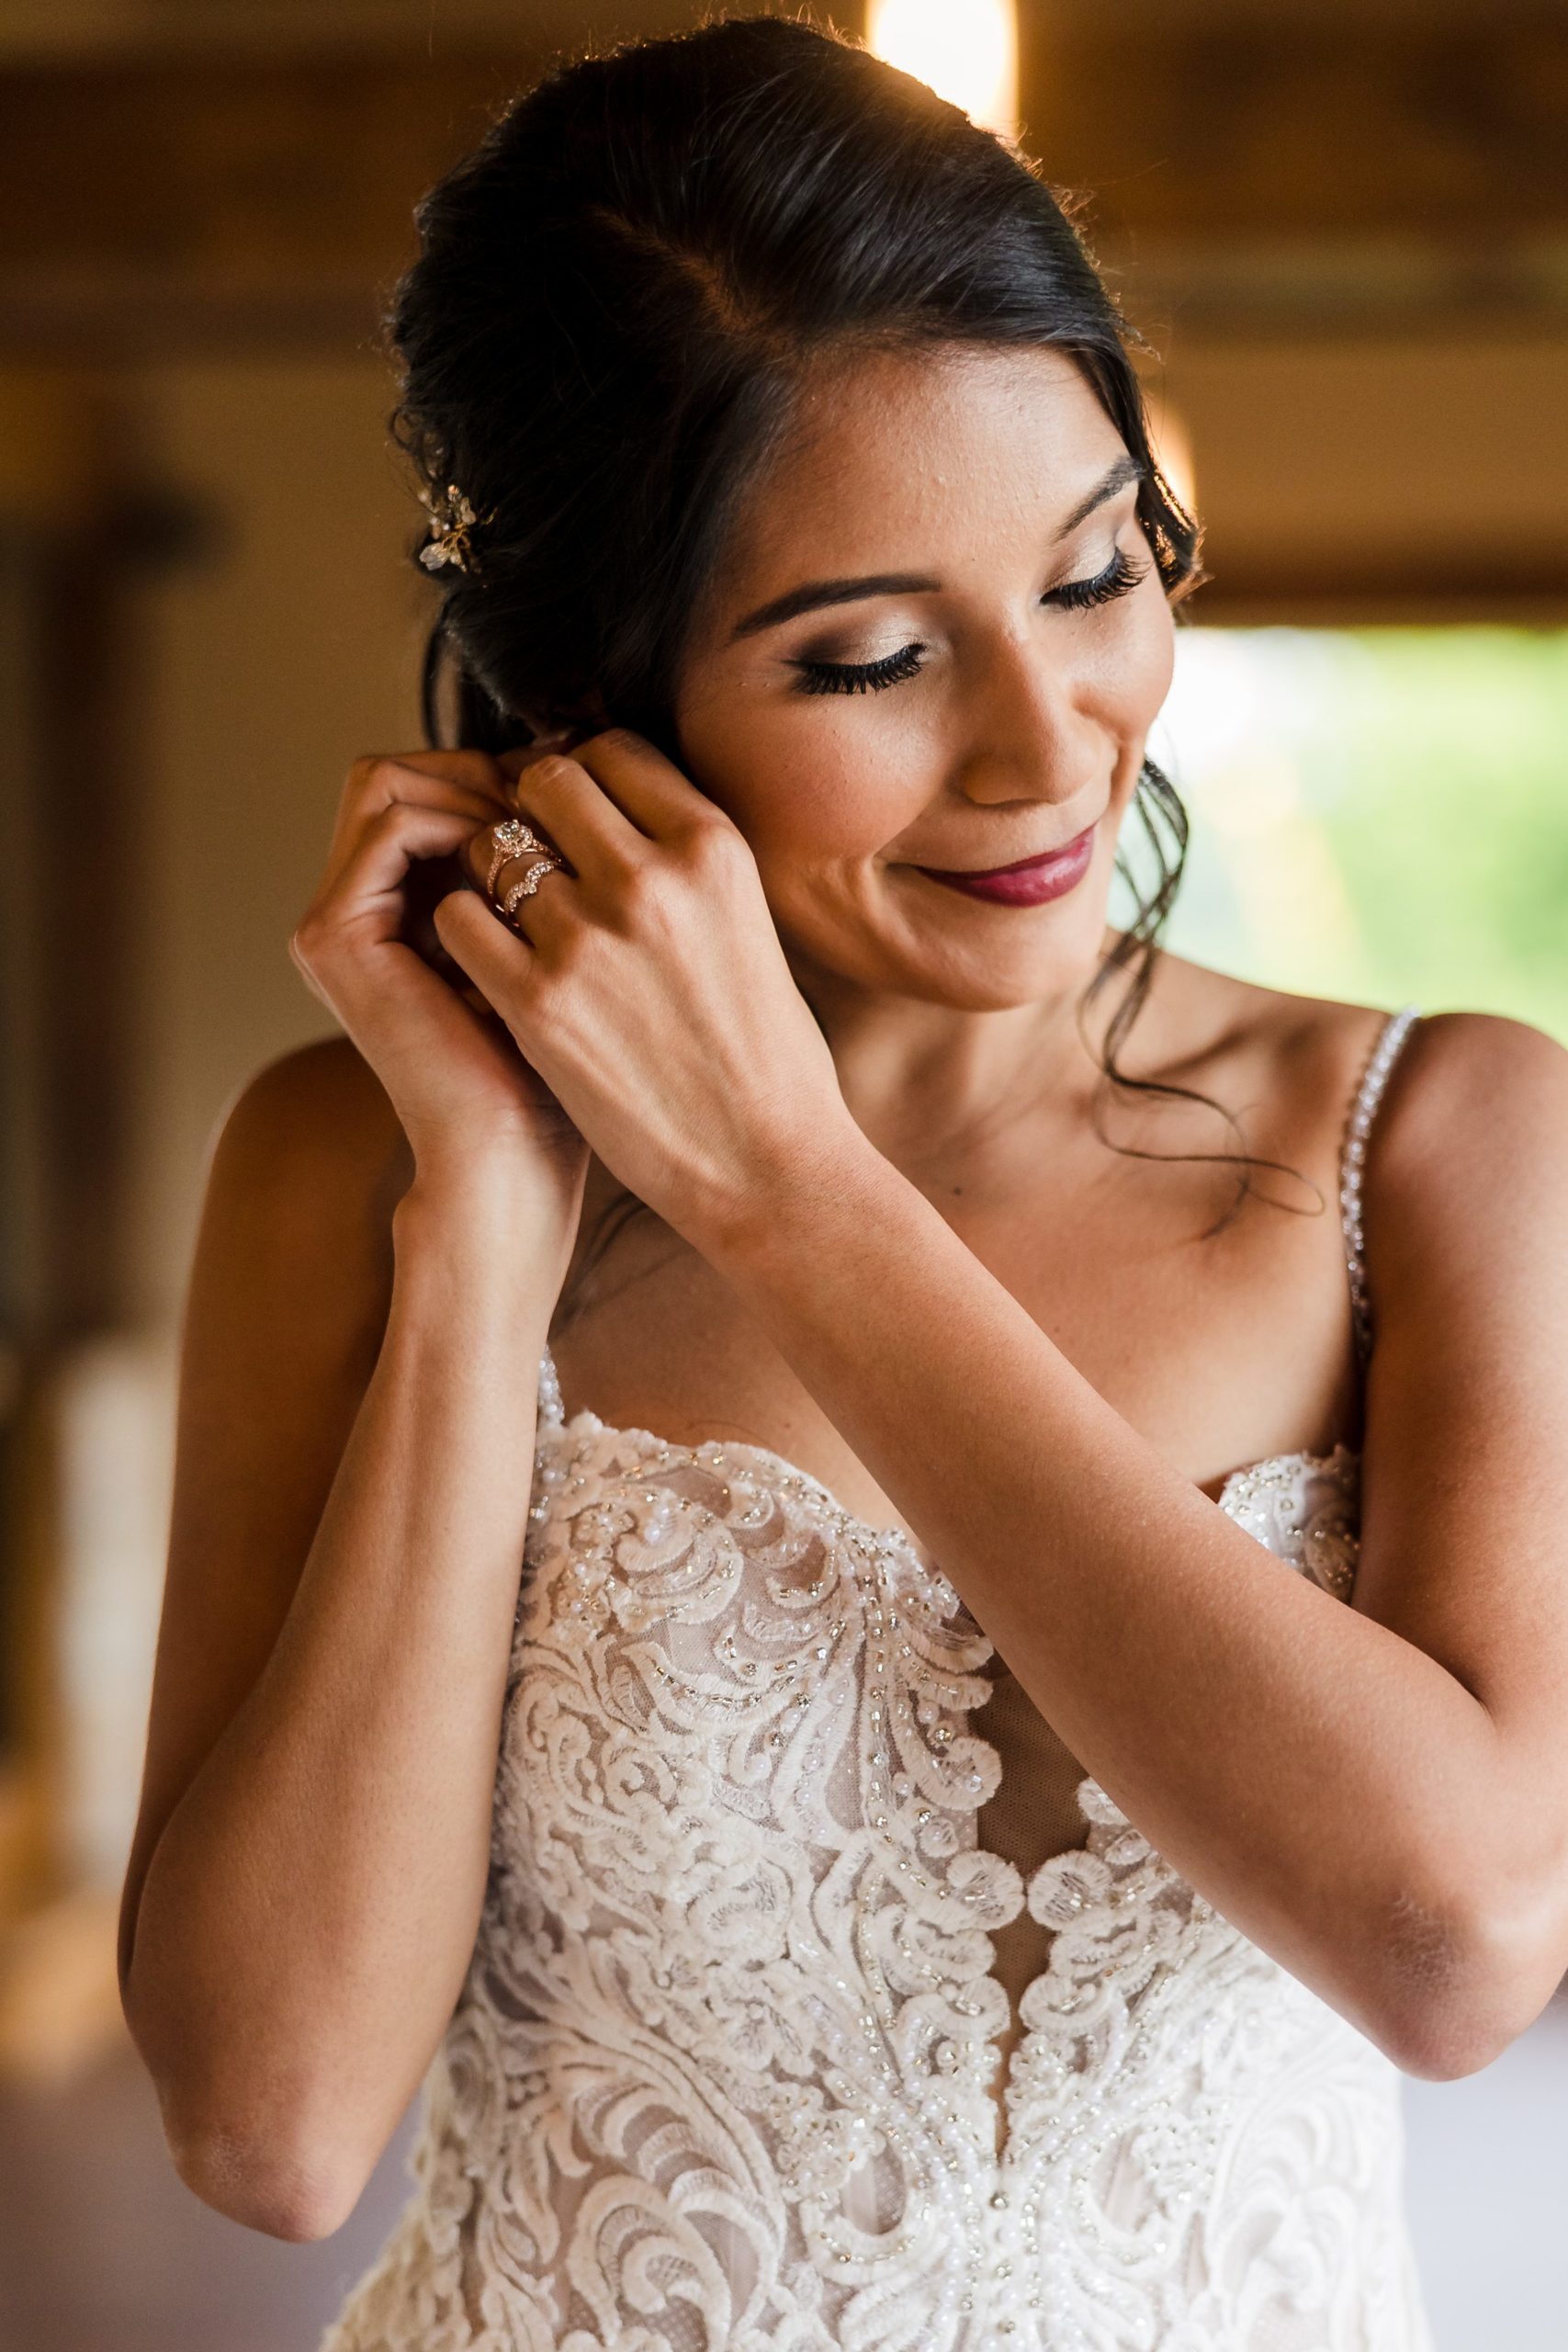 Bride puts on her earings before her wedding at the Fisherman's Inn in Elburn, Illinois.